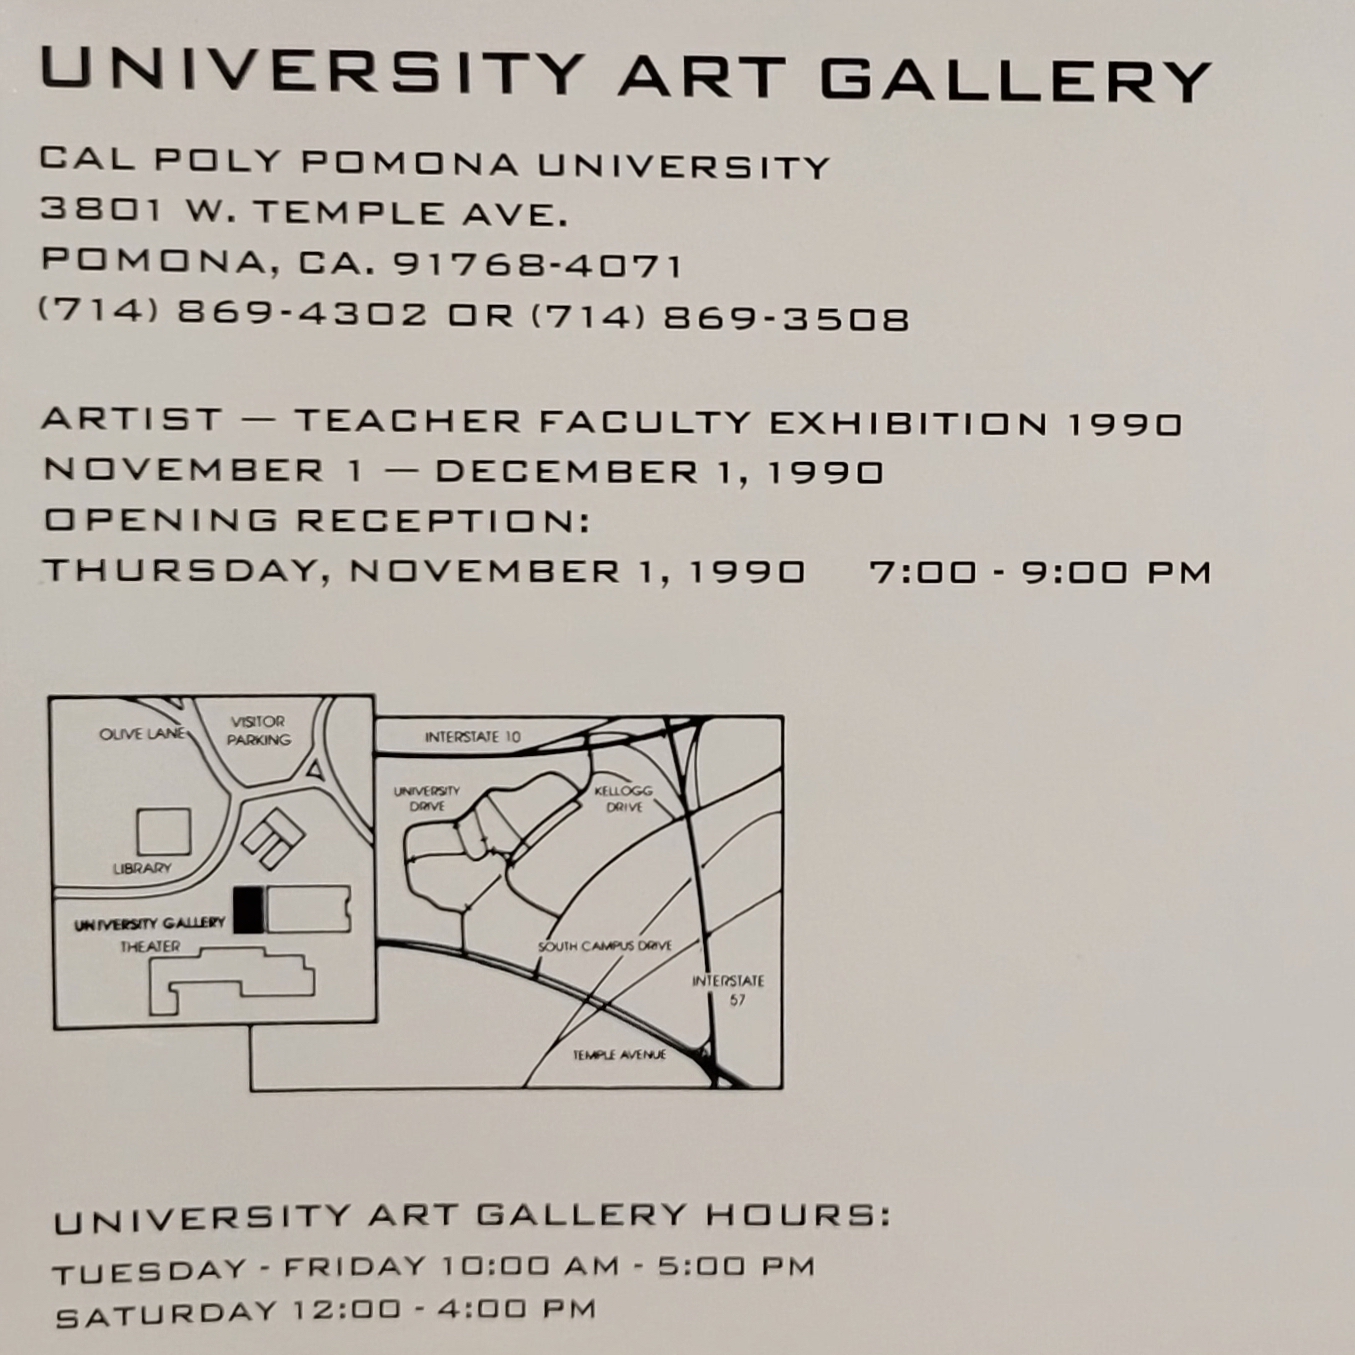 Artist teacher faculty exhibition 1990 november 1 - December 1 1990